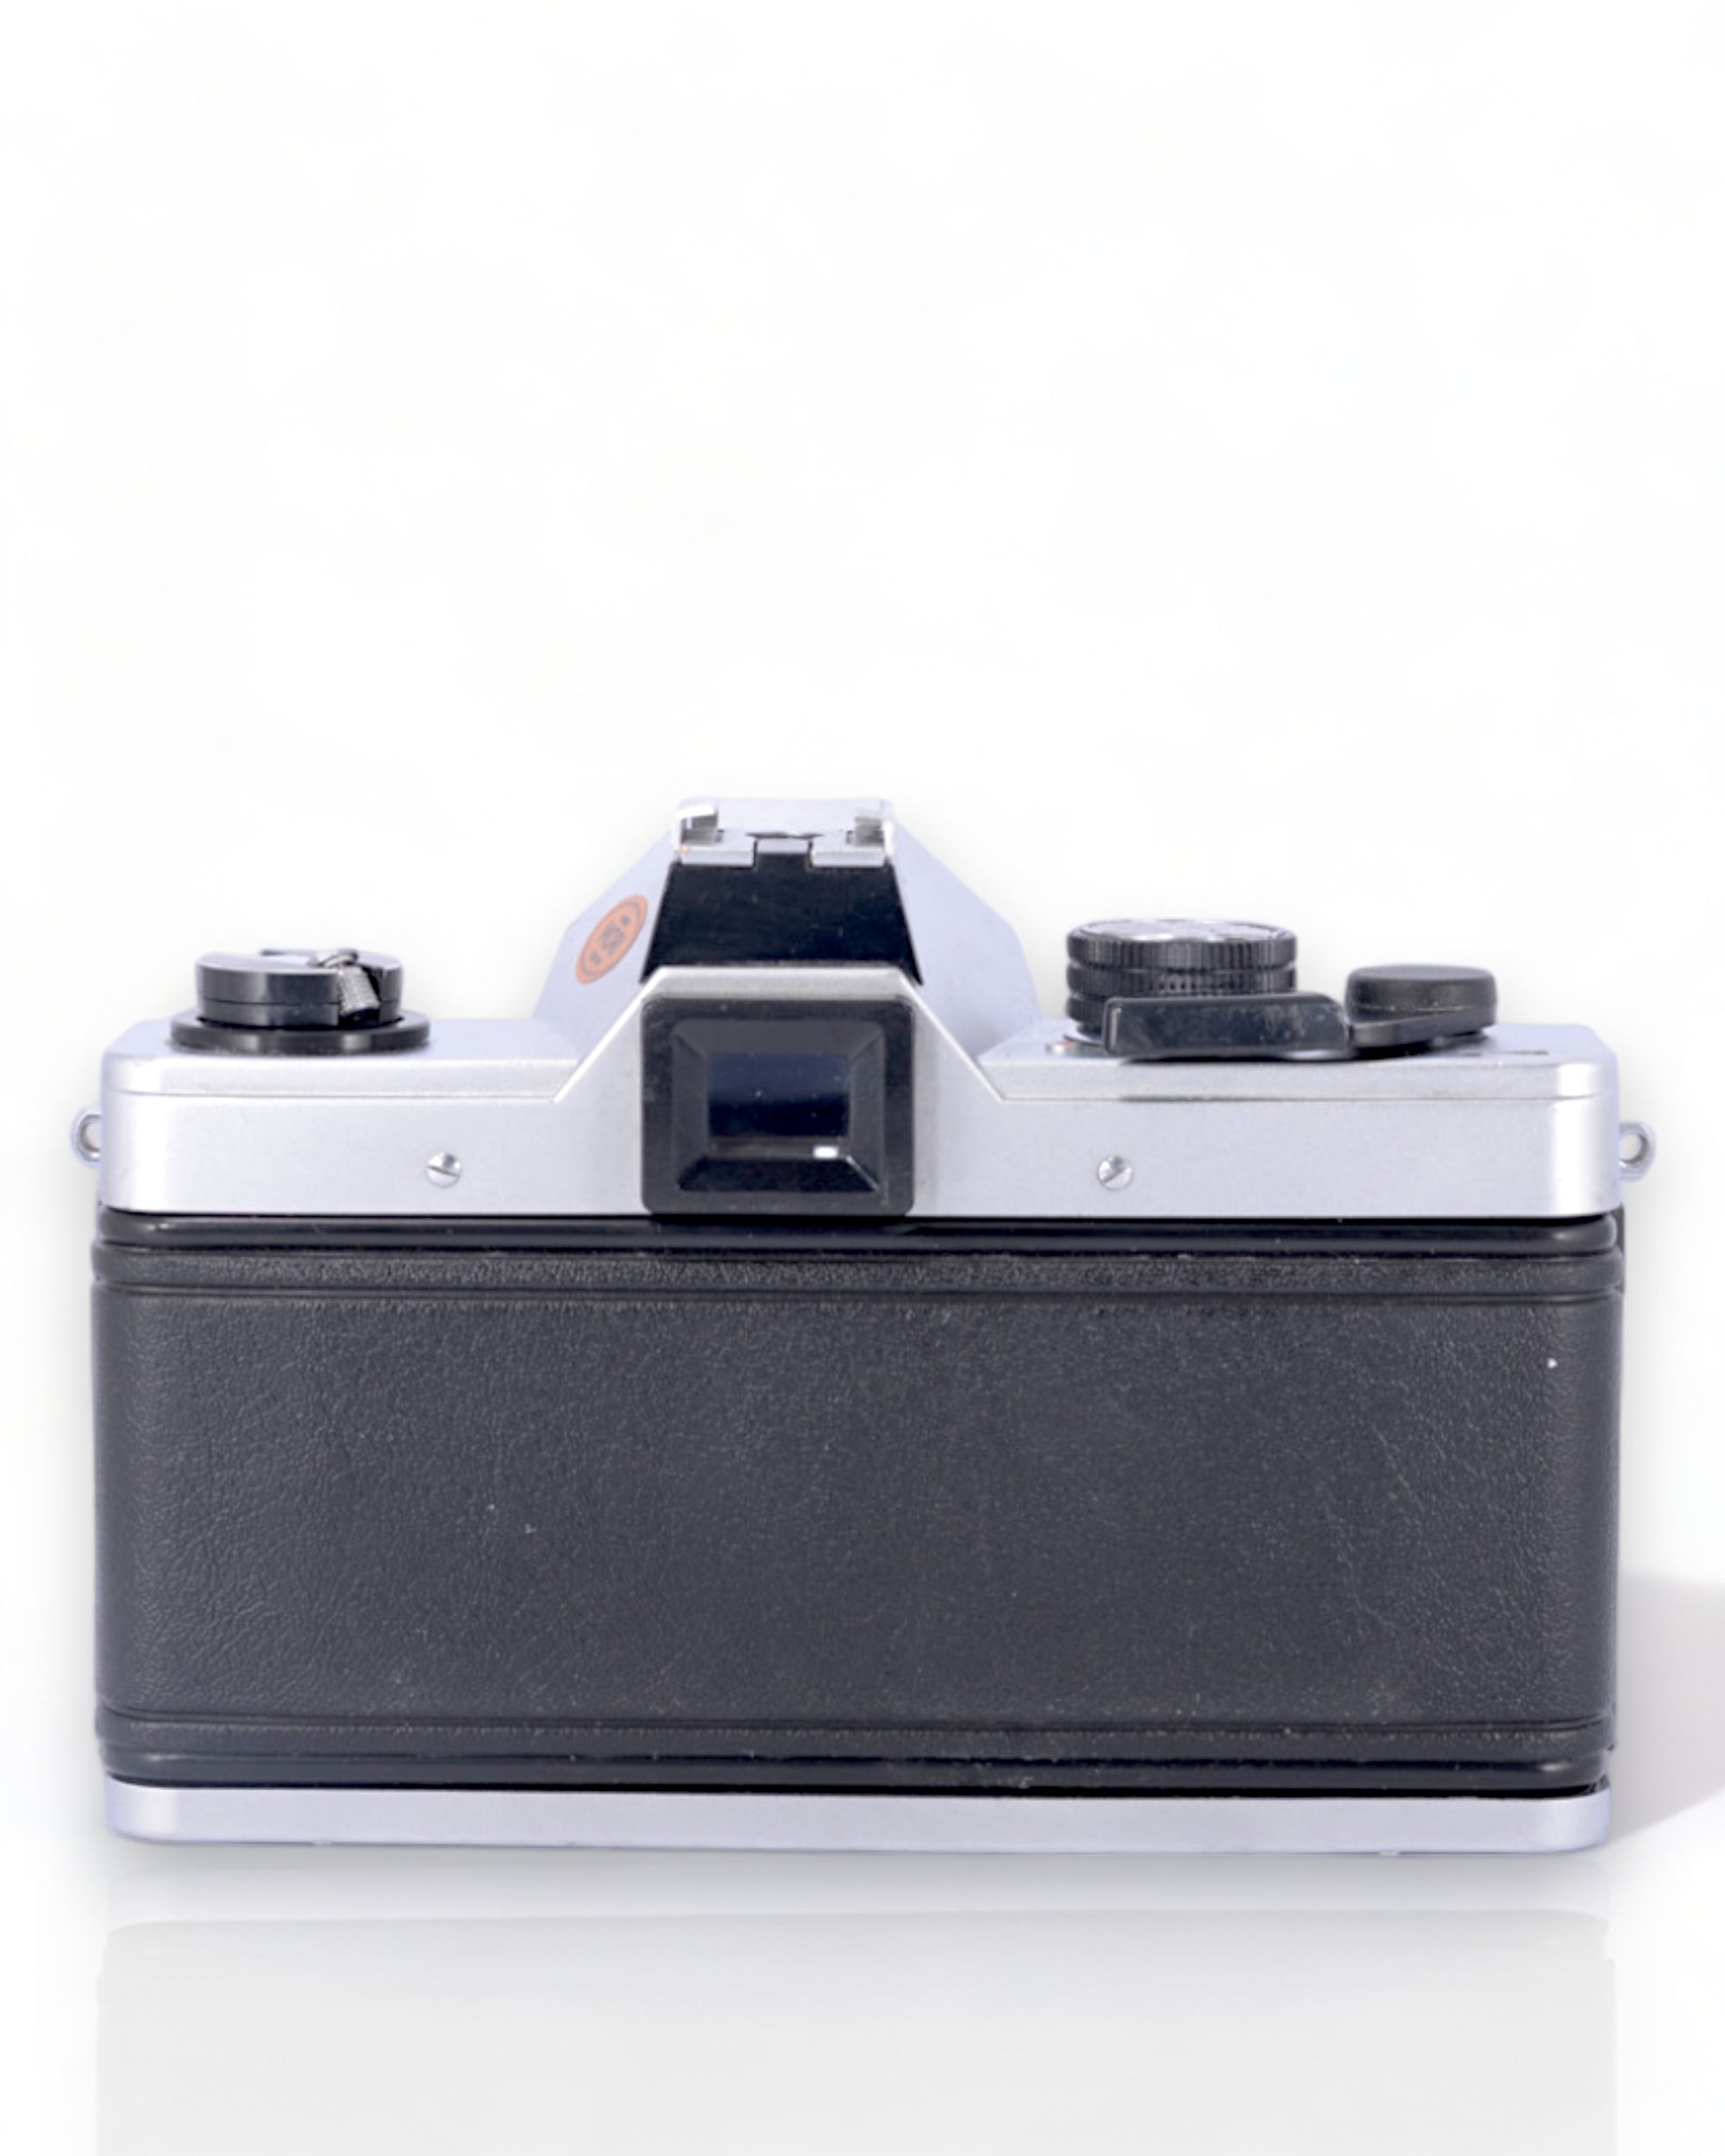 Praktica MTL 5B 35mm SLR Film Camera with 35mm f2.8 Lens